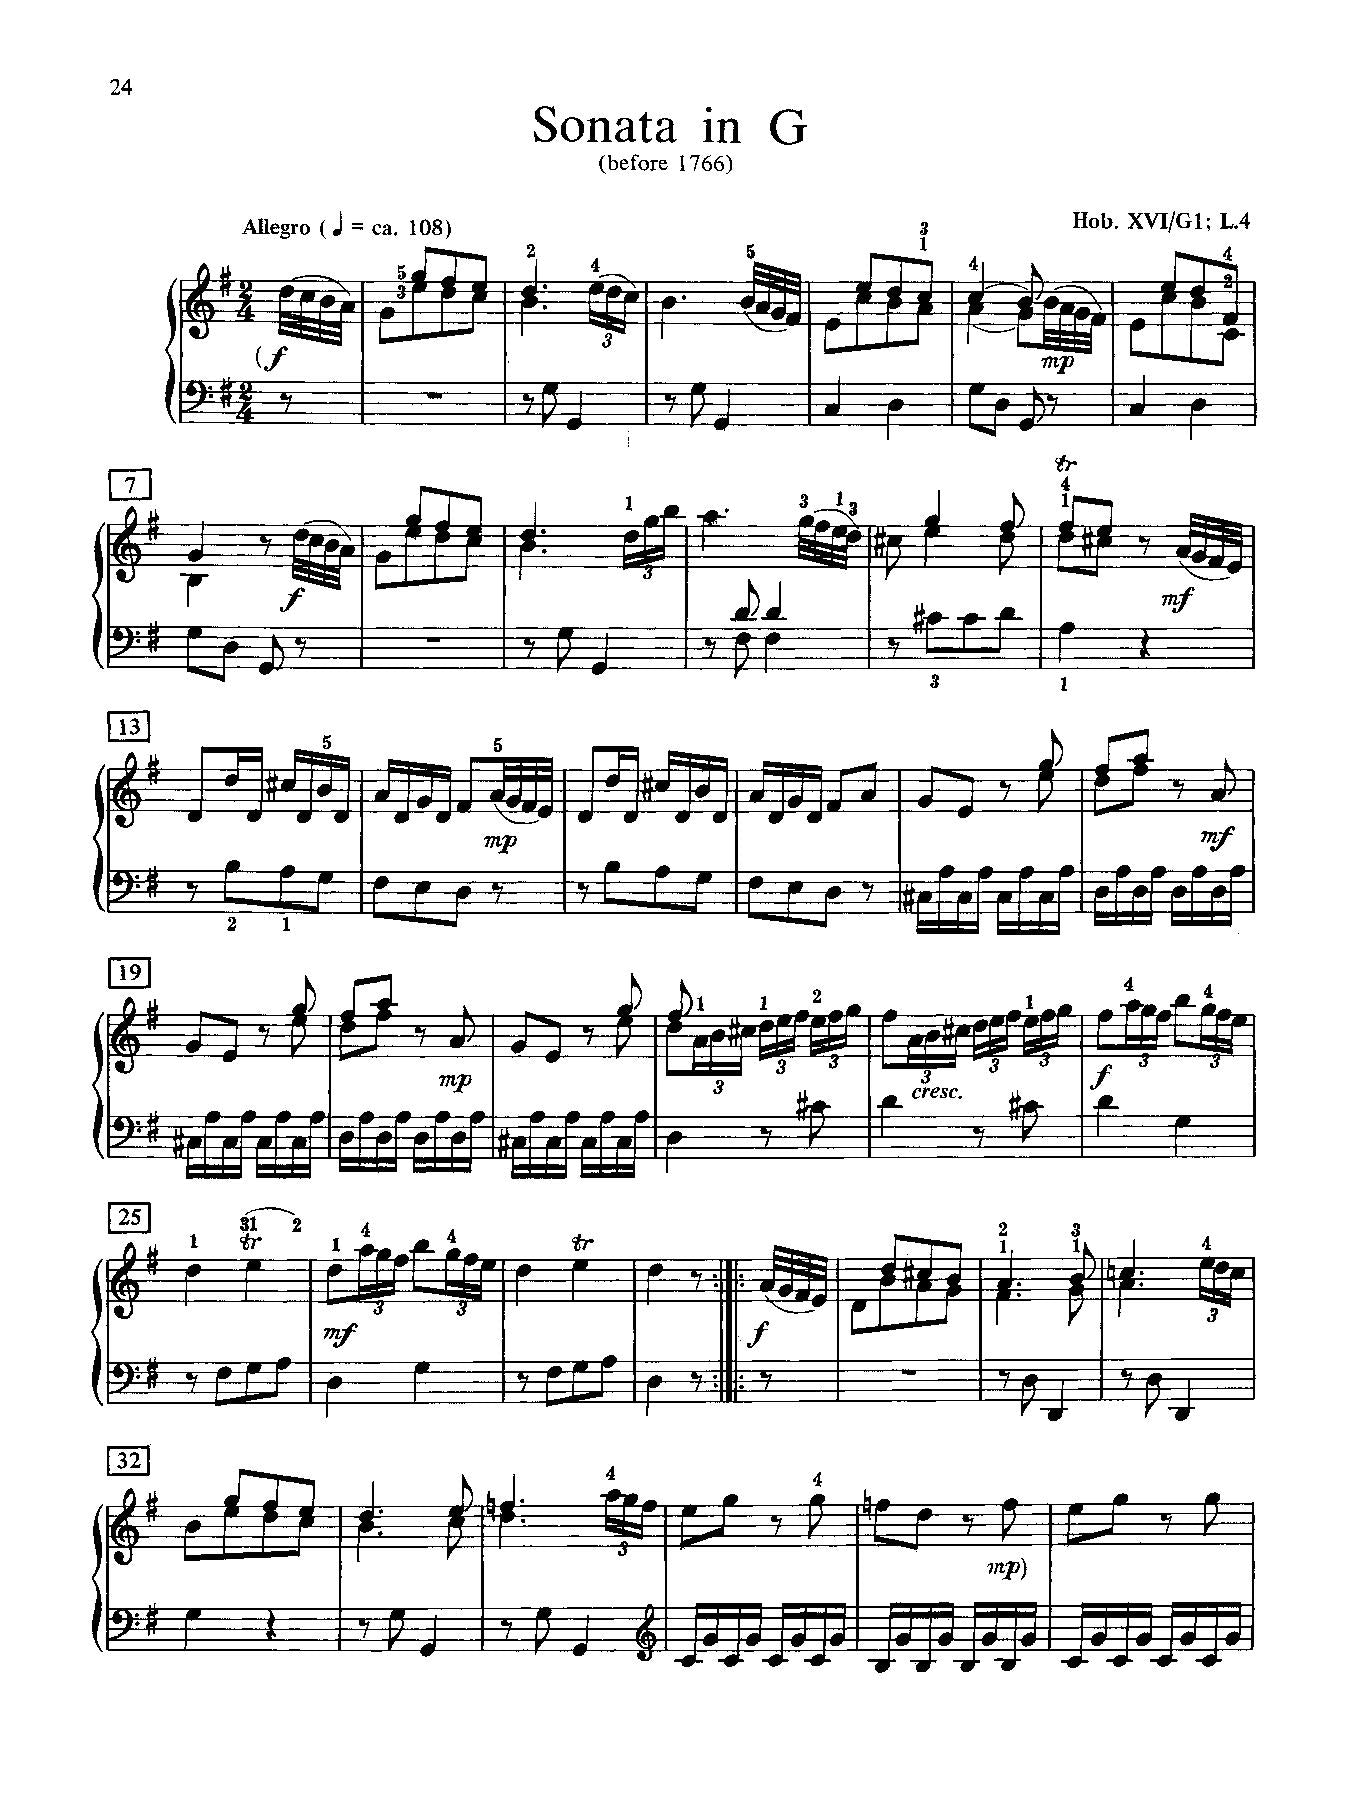 Haydn: The Complete Piano Sonatas, Volume 1